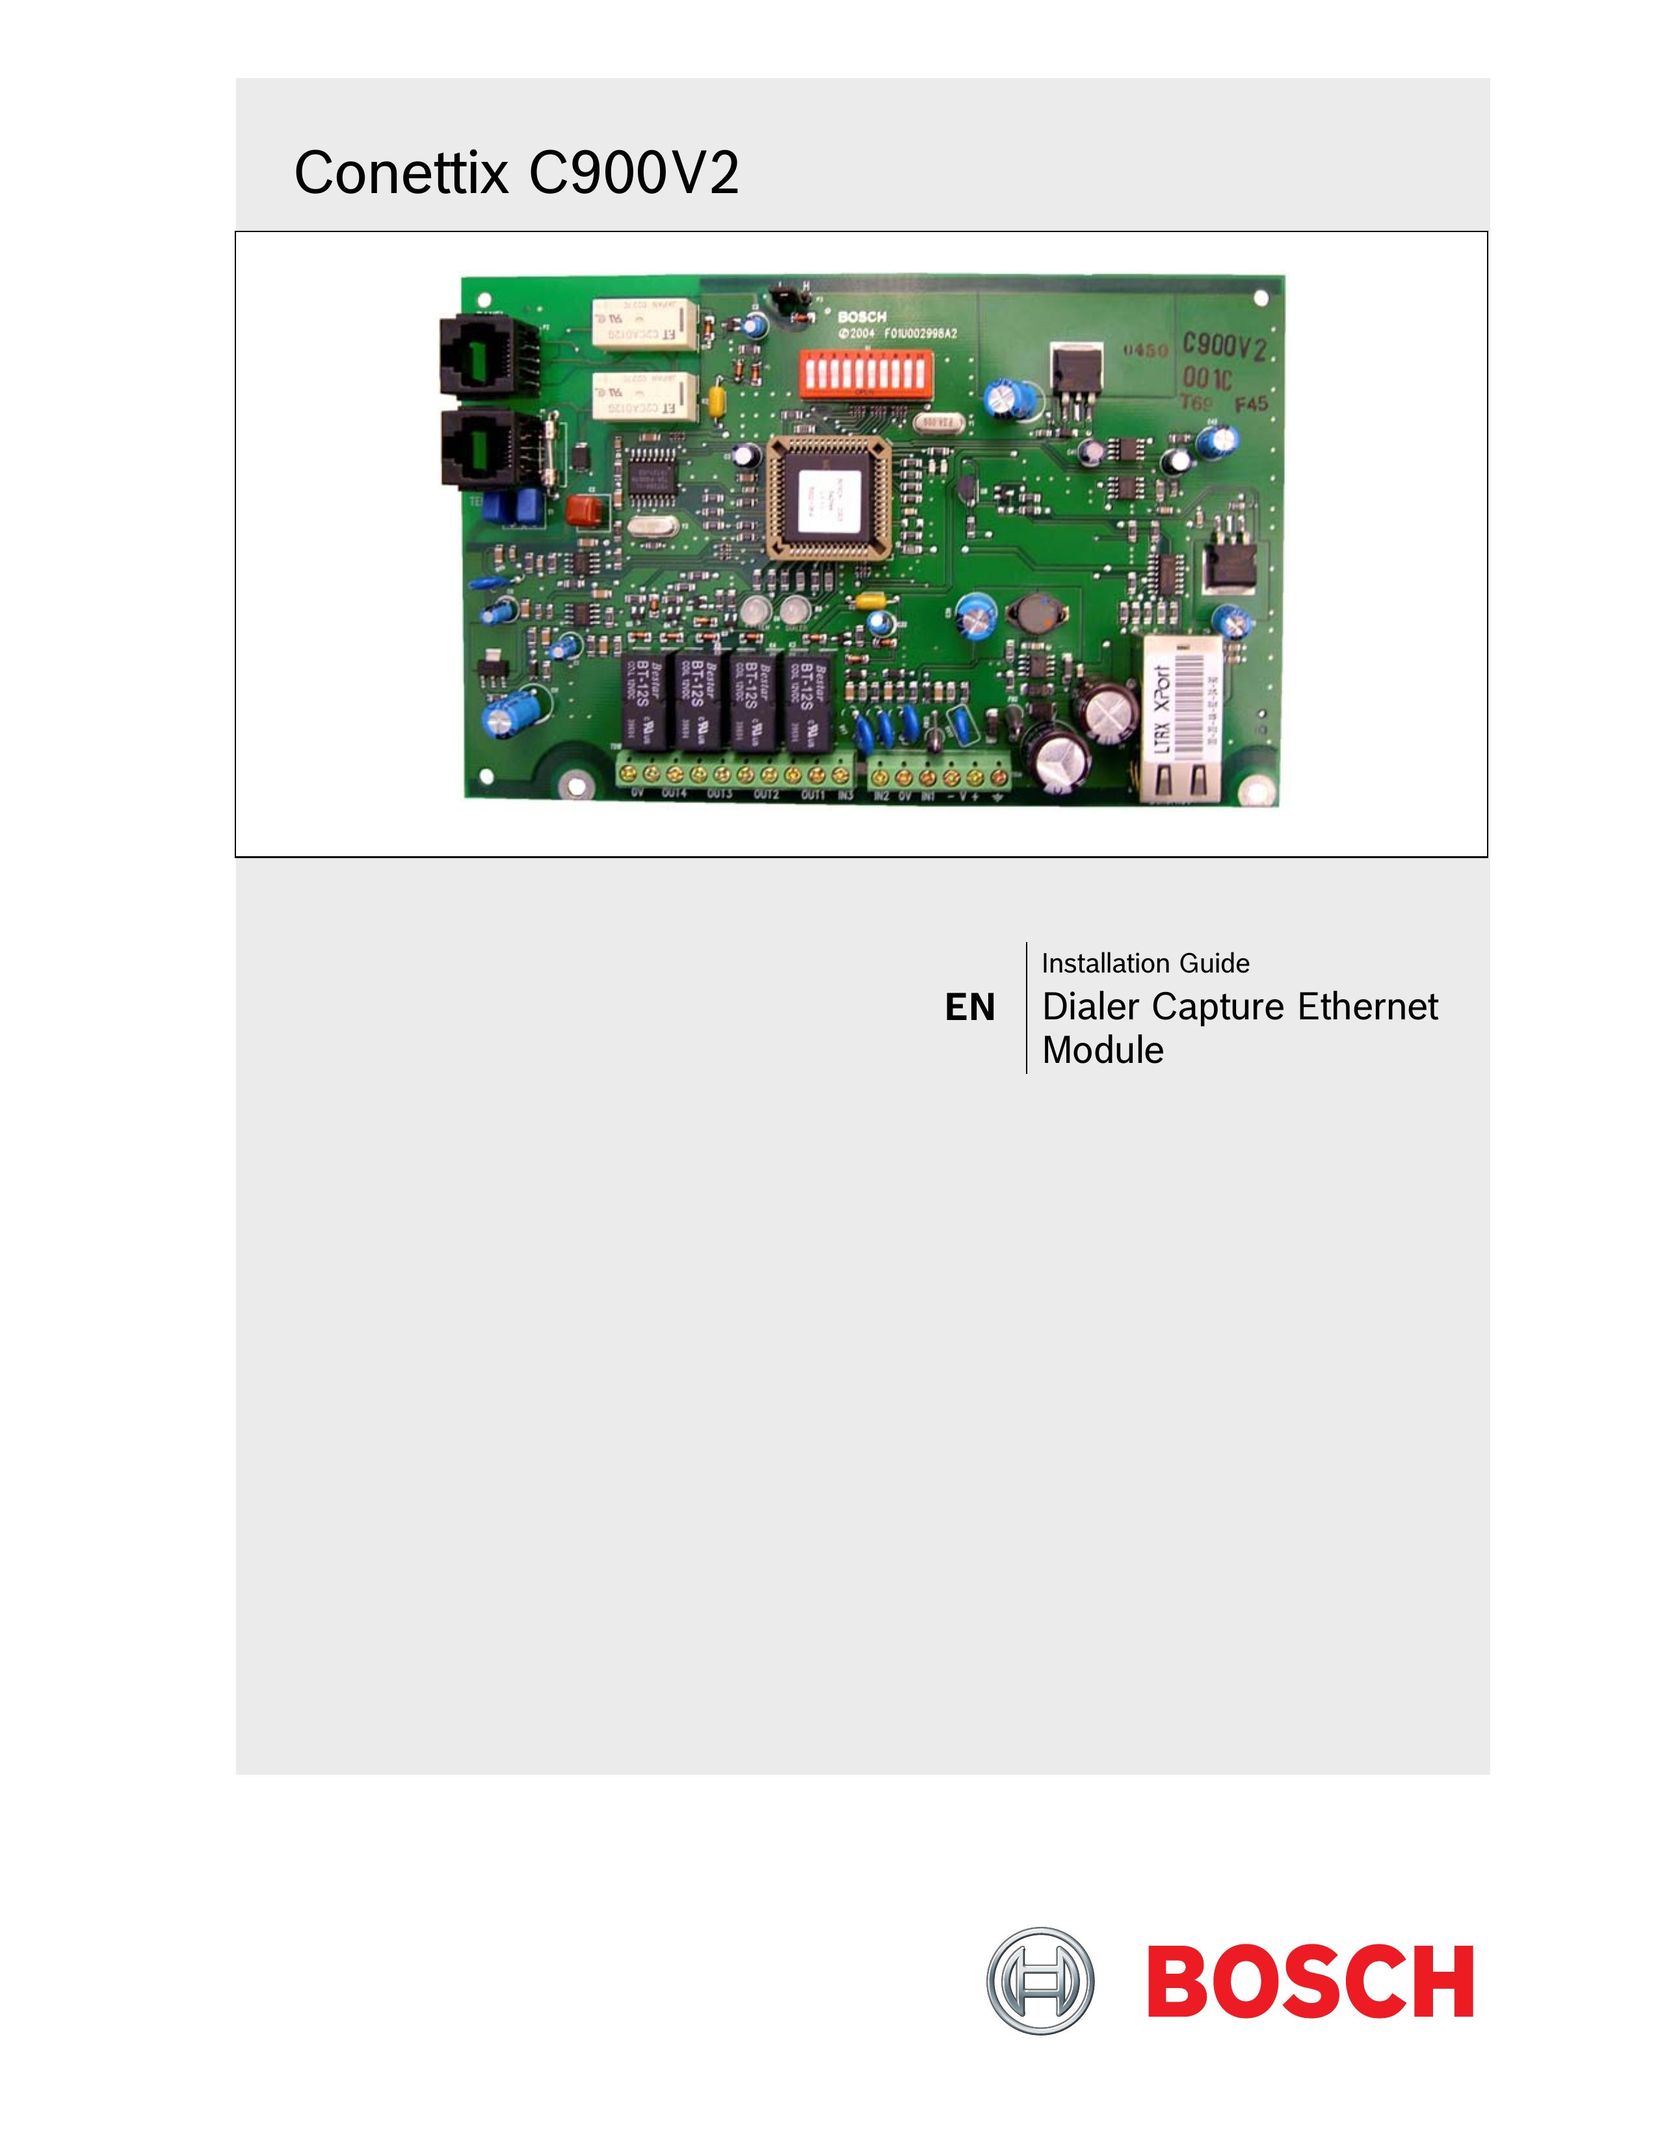 Bosch Appliances C900V2 Network Card User Manual